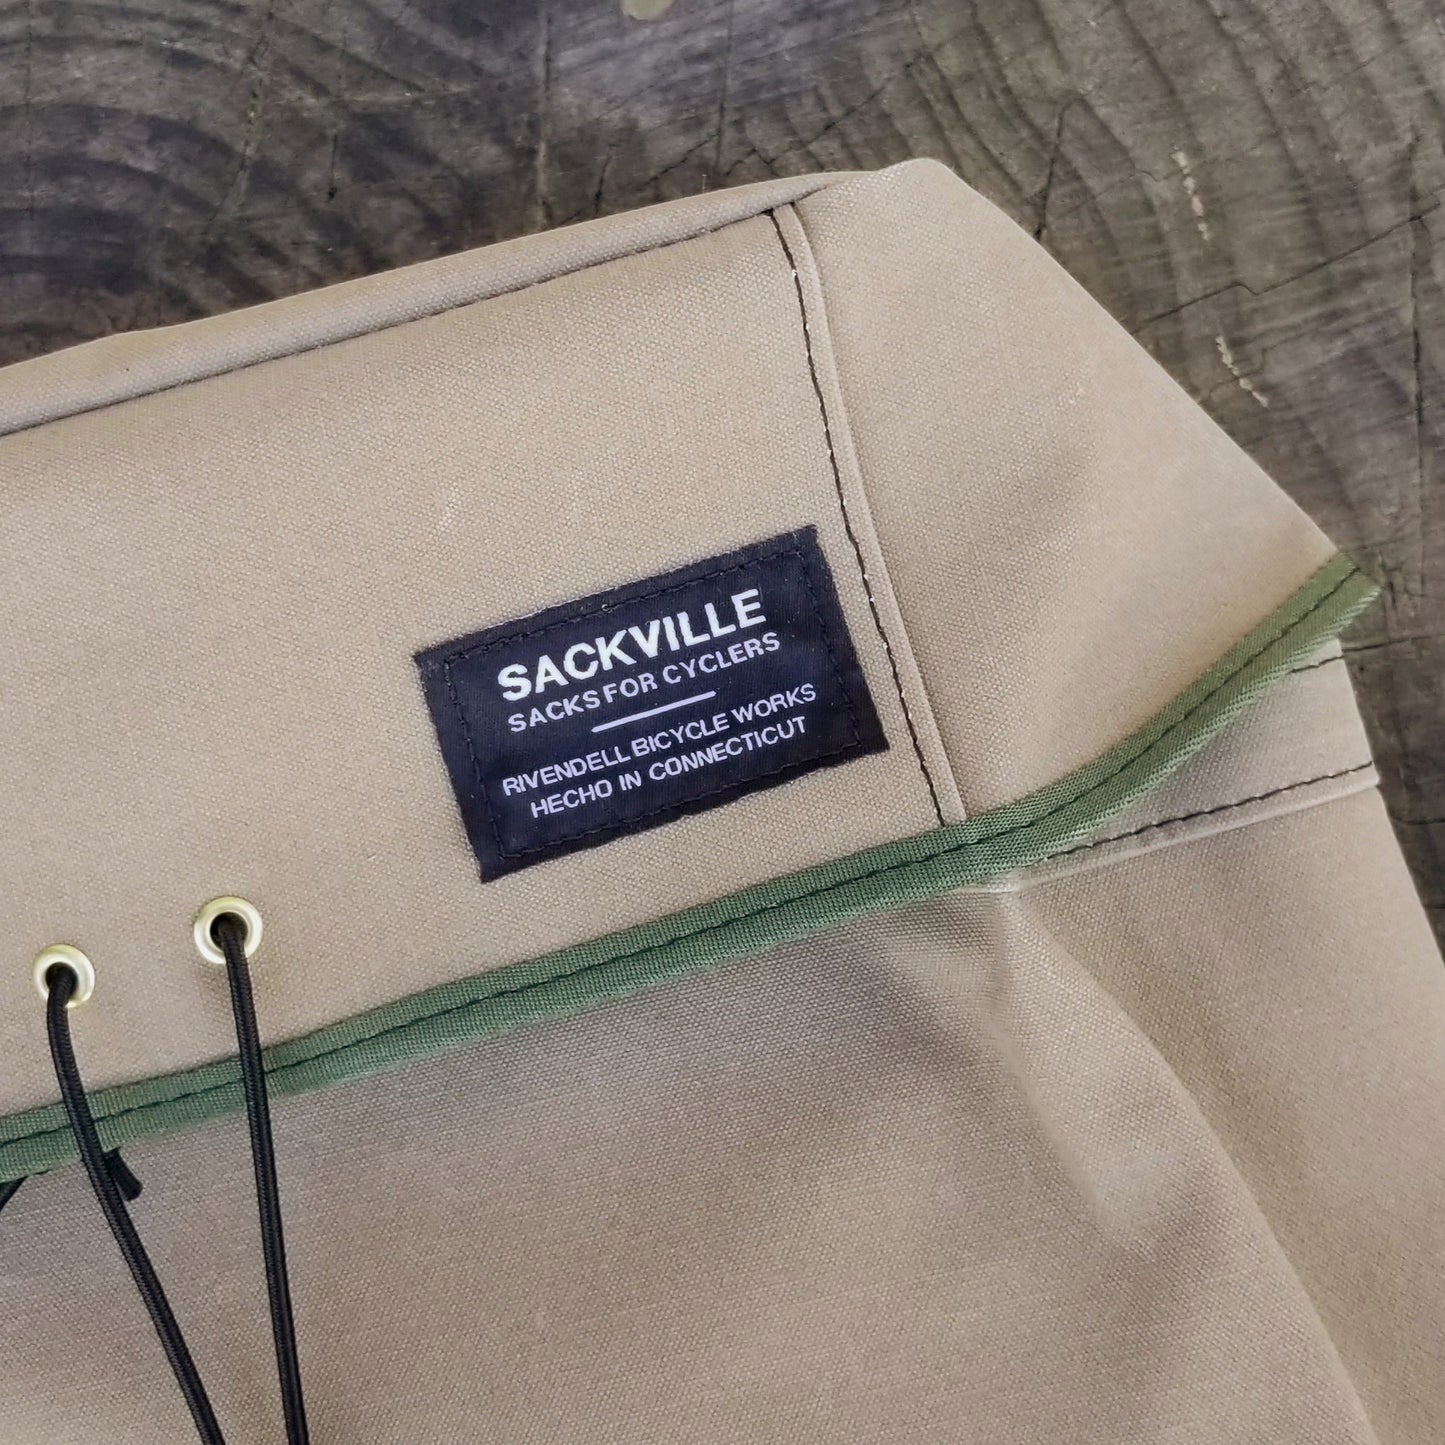 Sackville Backabike Bag, each